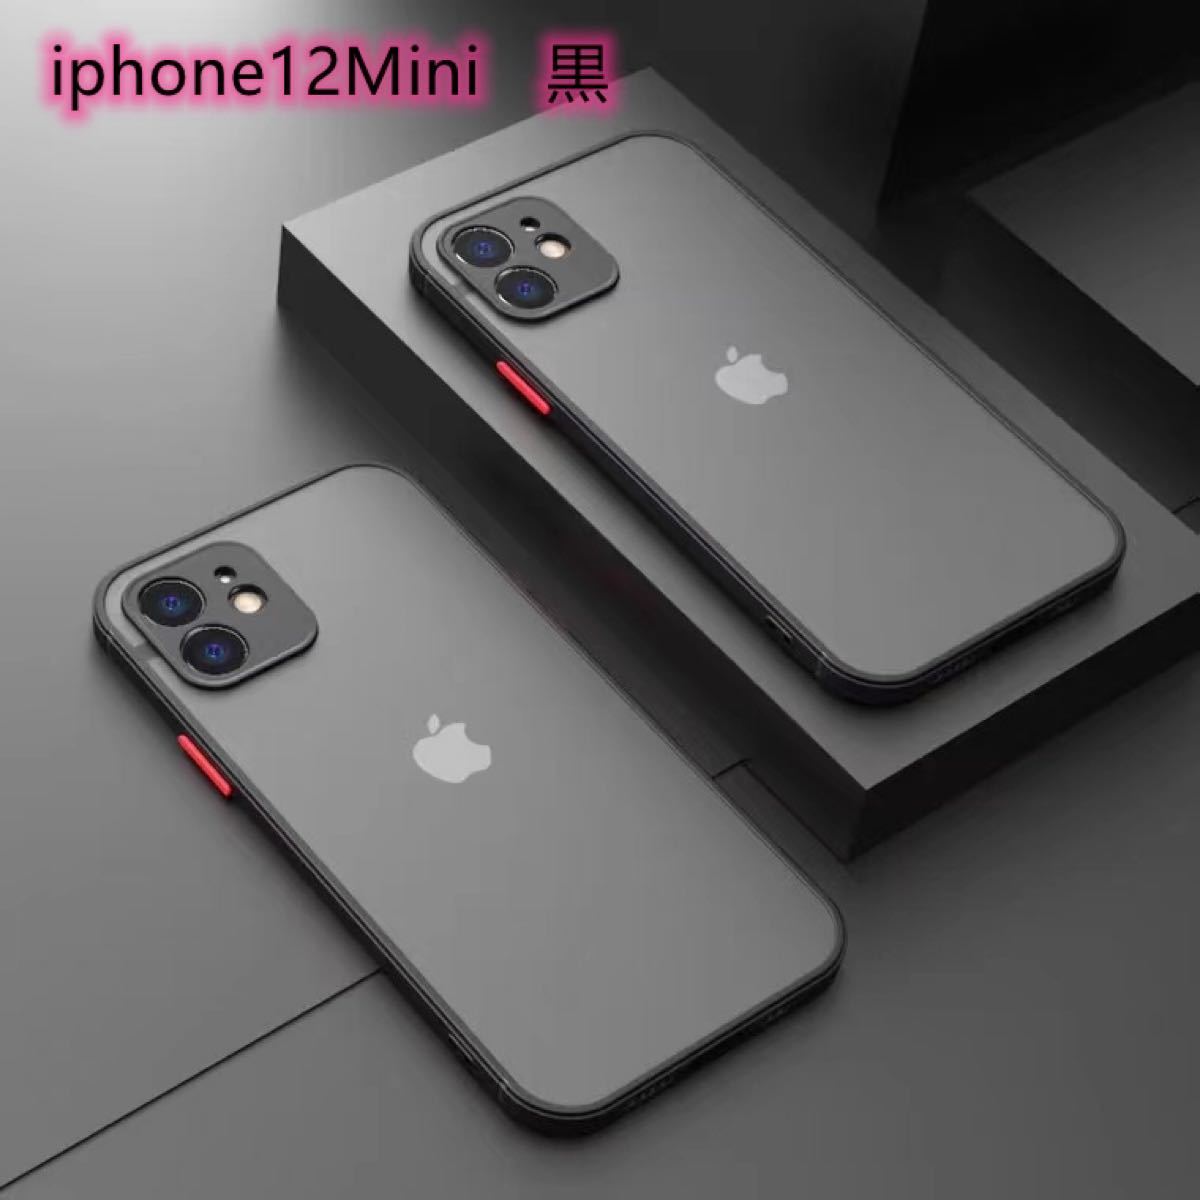 iphone12 Mini 用 カバー ケース マット ワイヤレス充電対応